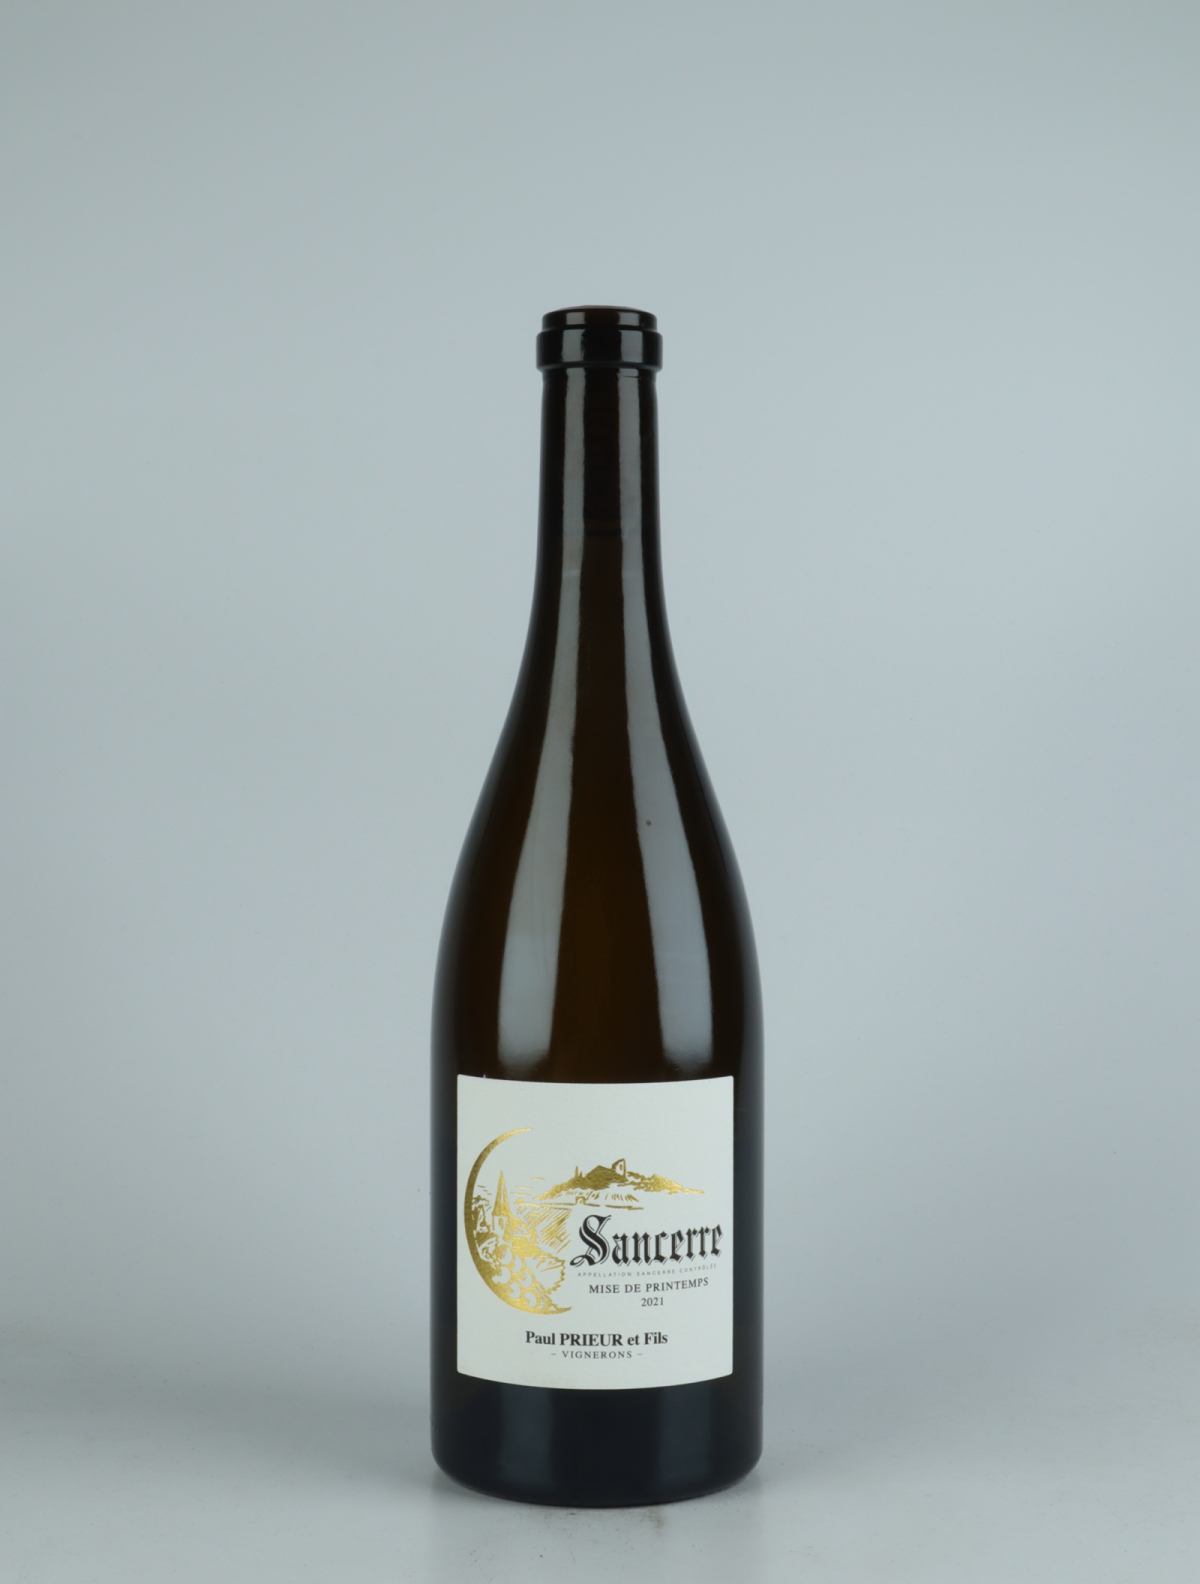 A bottle 2021 Sancerre White wine from , Loire in France